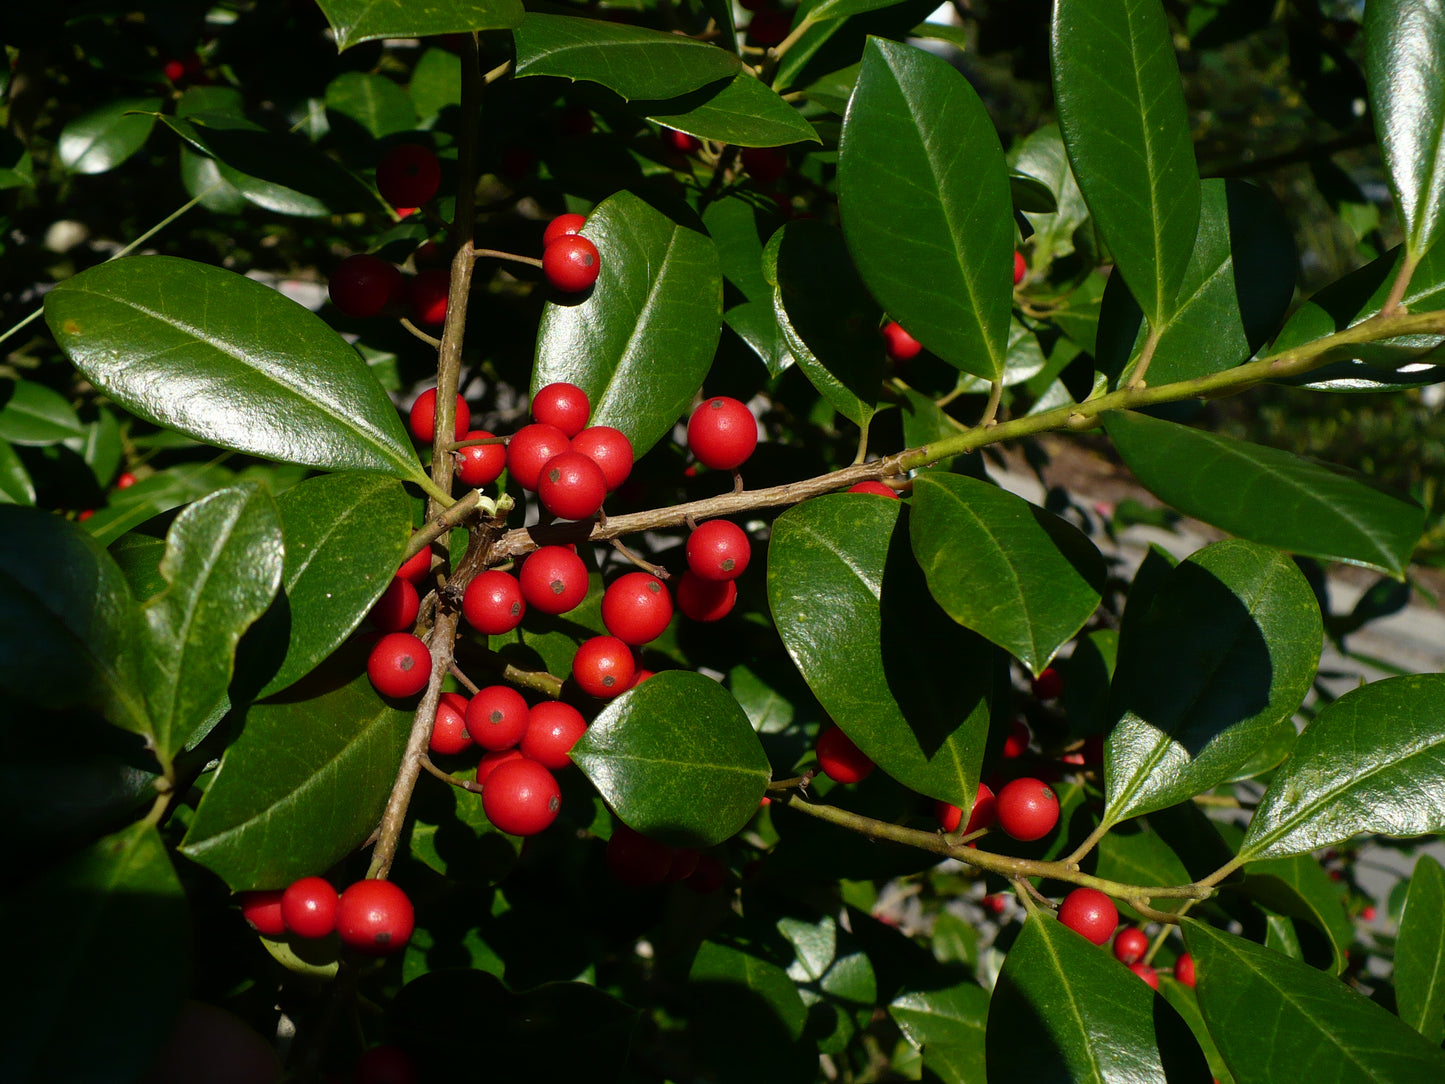 Topal Holly Evergreen Tree Ilex attenuata 20 Seeds  USA Company